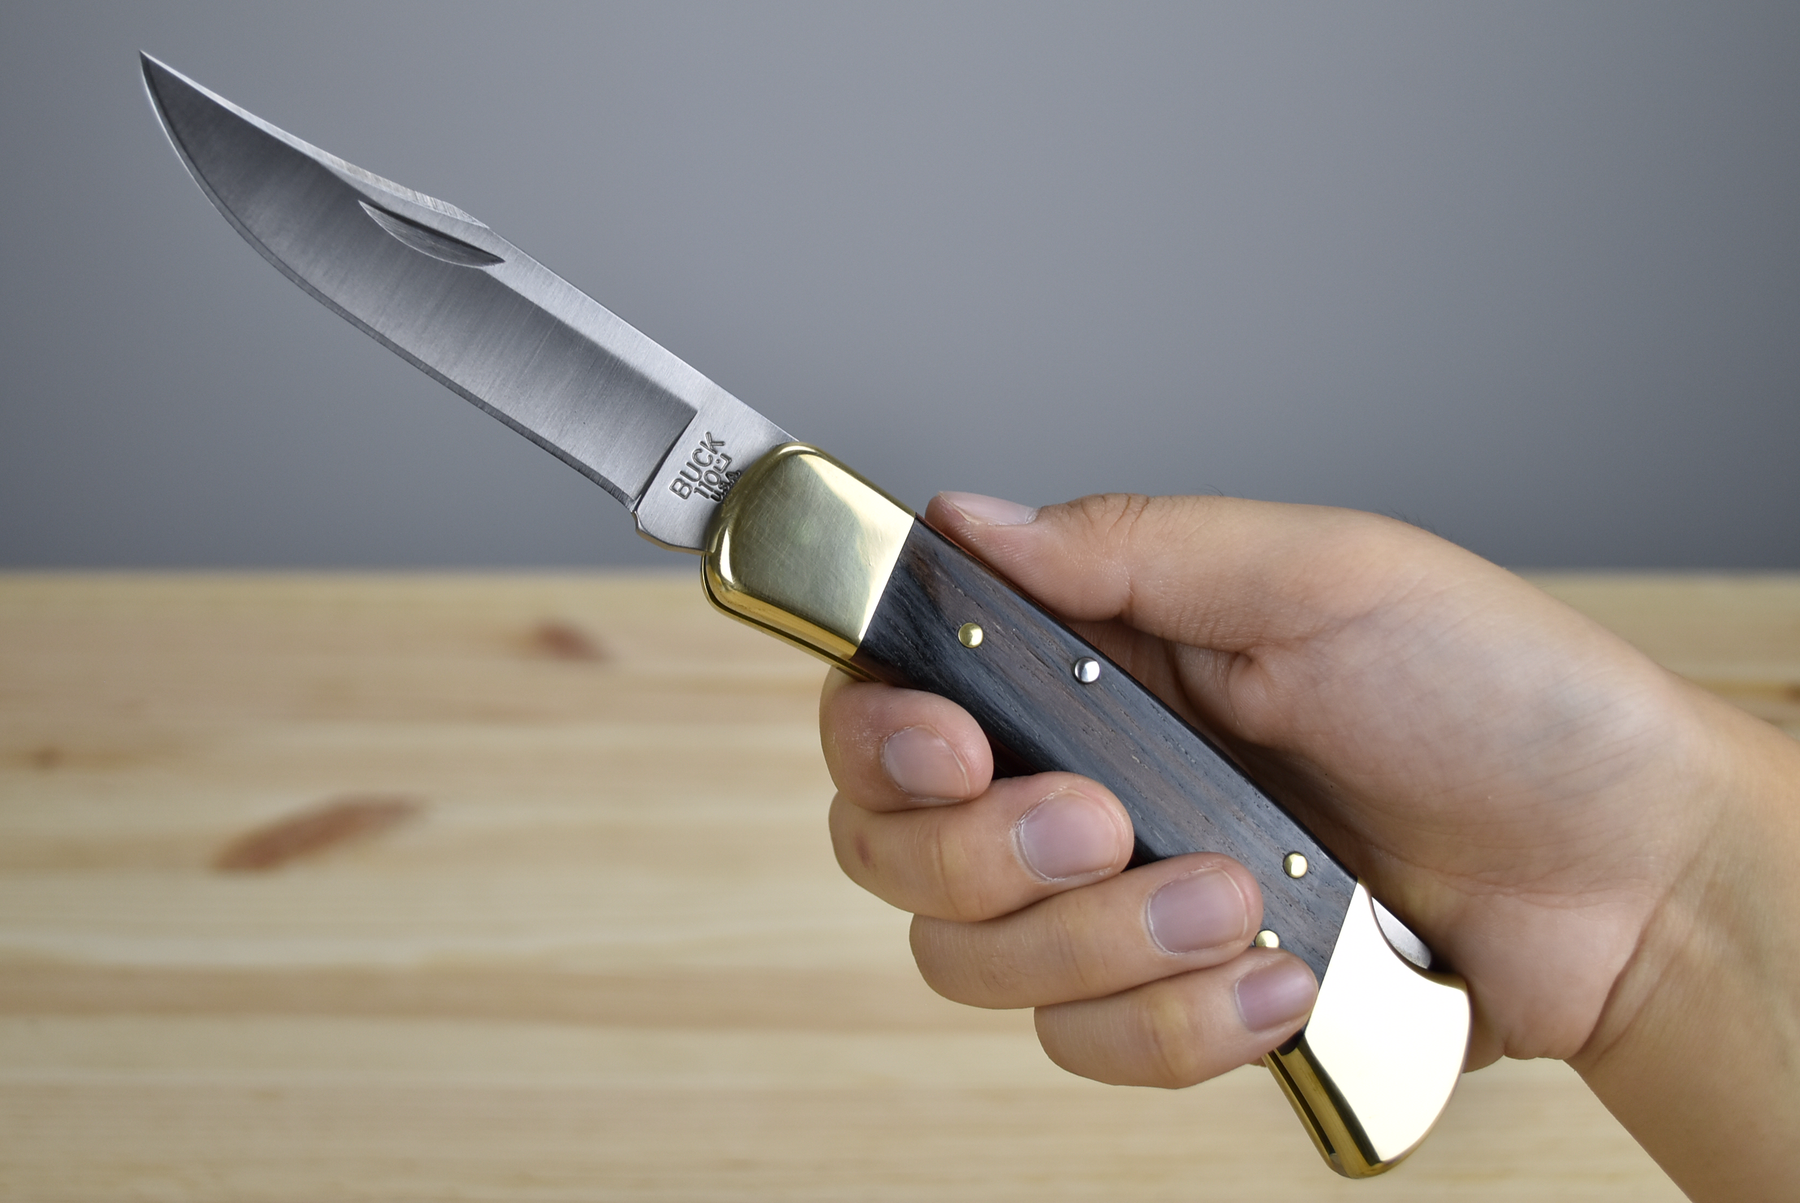 Buck® 110 Hunter Folding Knife